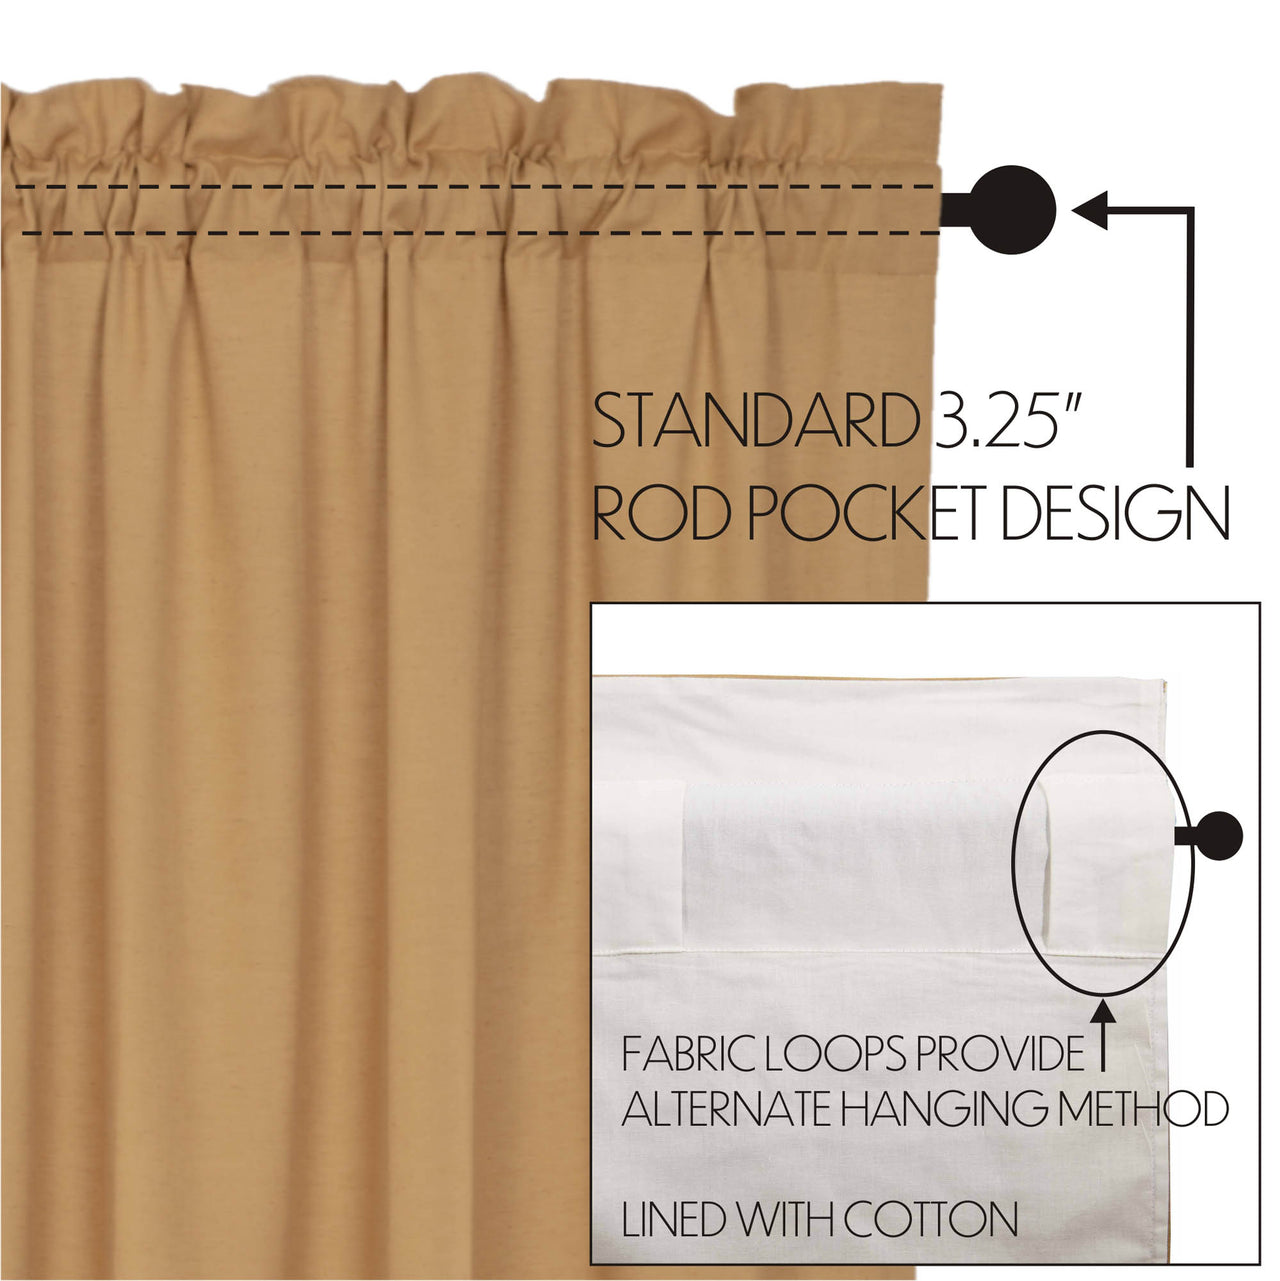 Simple Life Flax Khaki Valance Curtain 16x72 VHC Brands